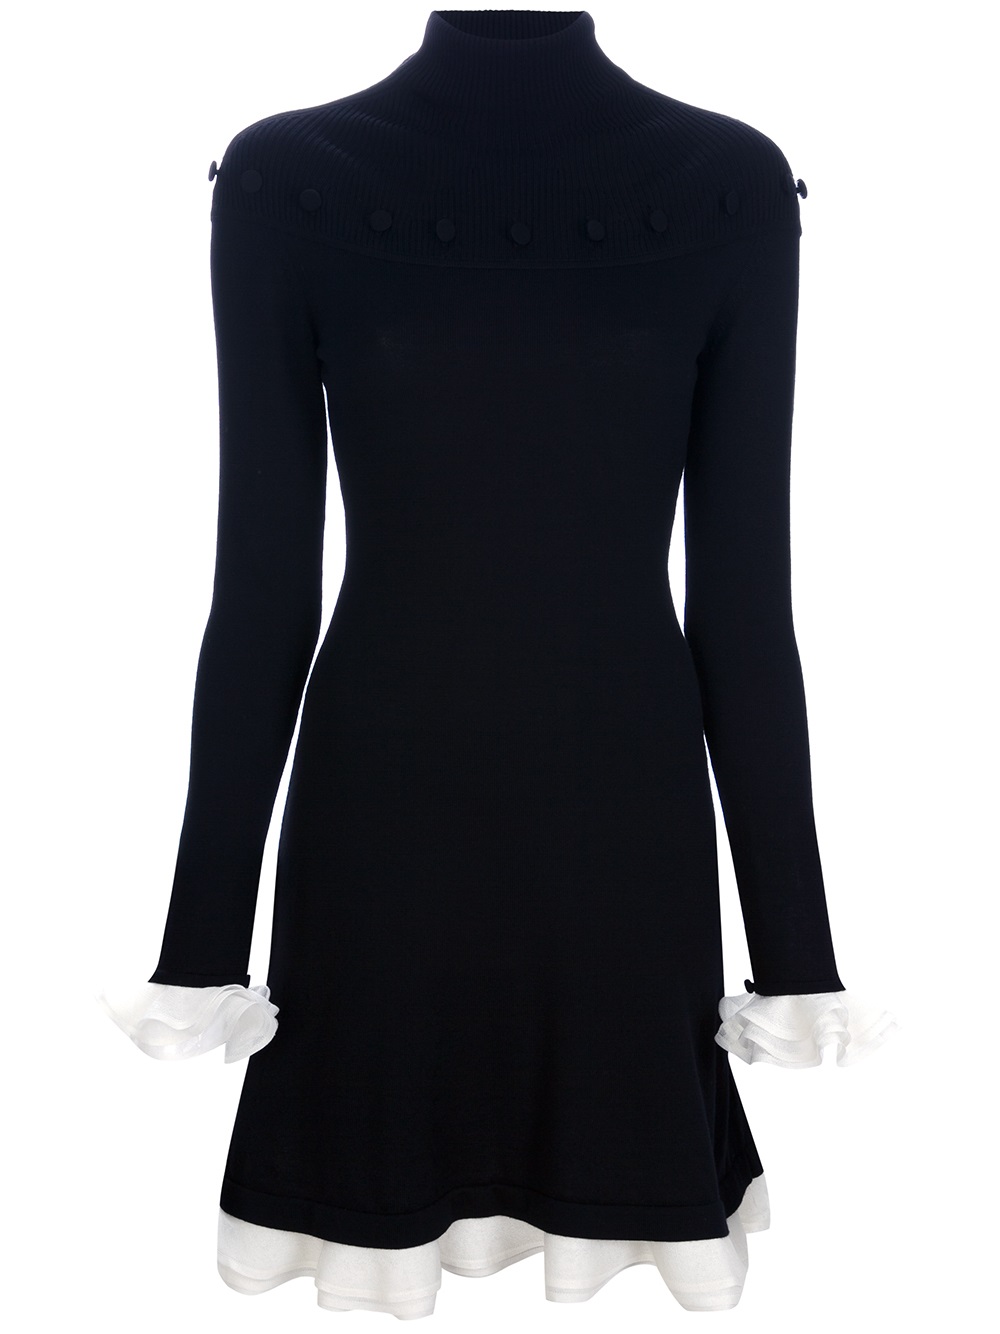 Lyst - Alexander Mcqueen Turtle Neck Jersey Dress in Black